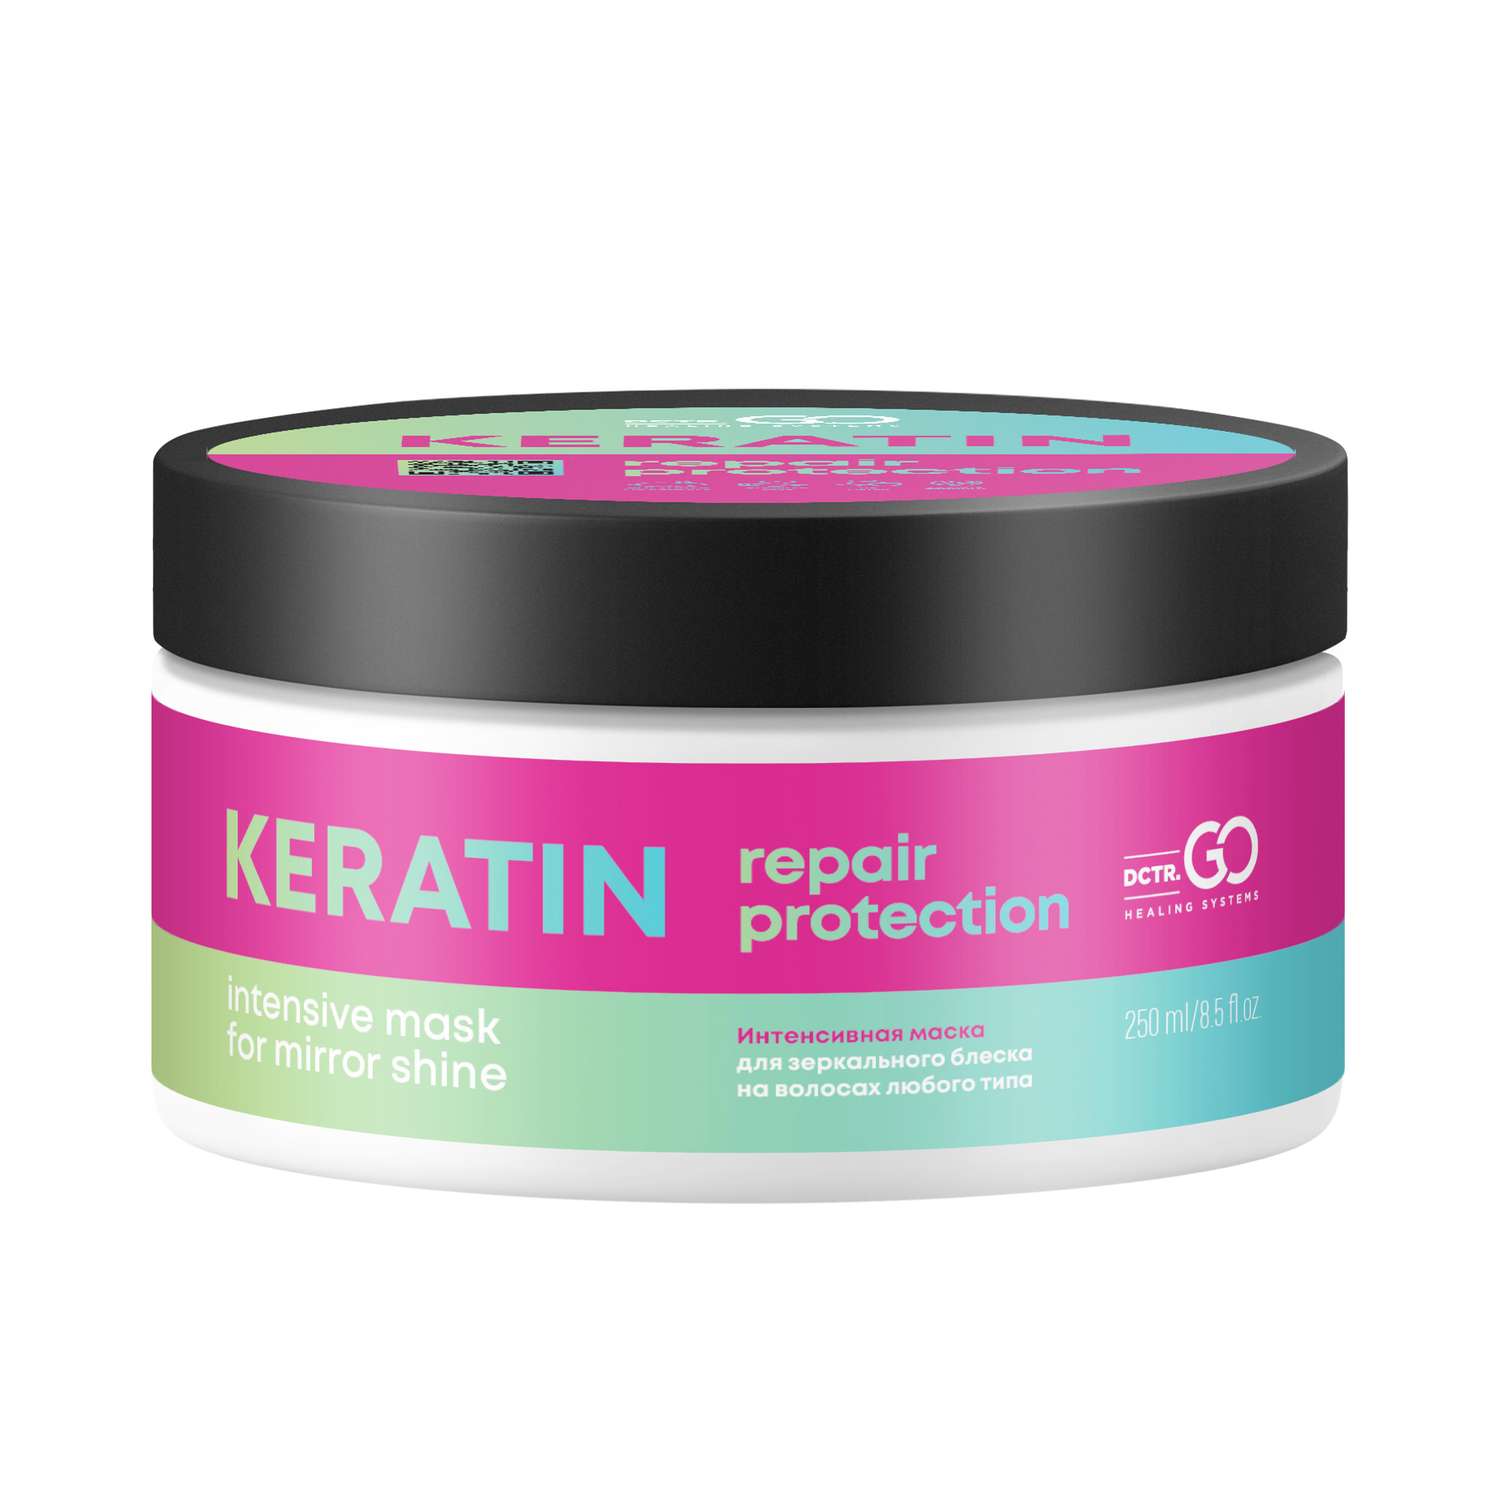 Маска DCTR.GO HEALING SYSTEM Kератиновая маска для любого типа волос Keratin SPA Repair - фото 1